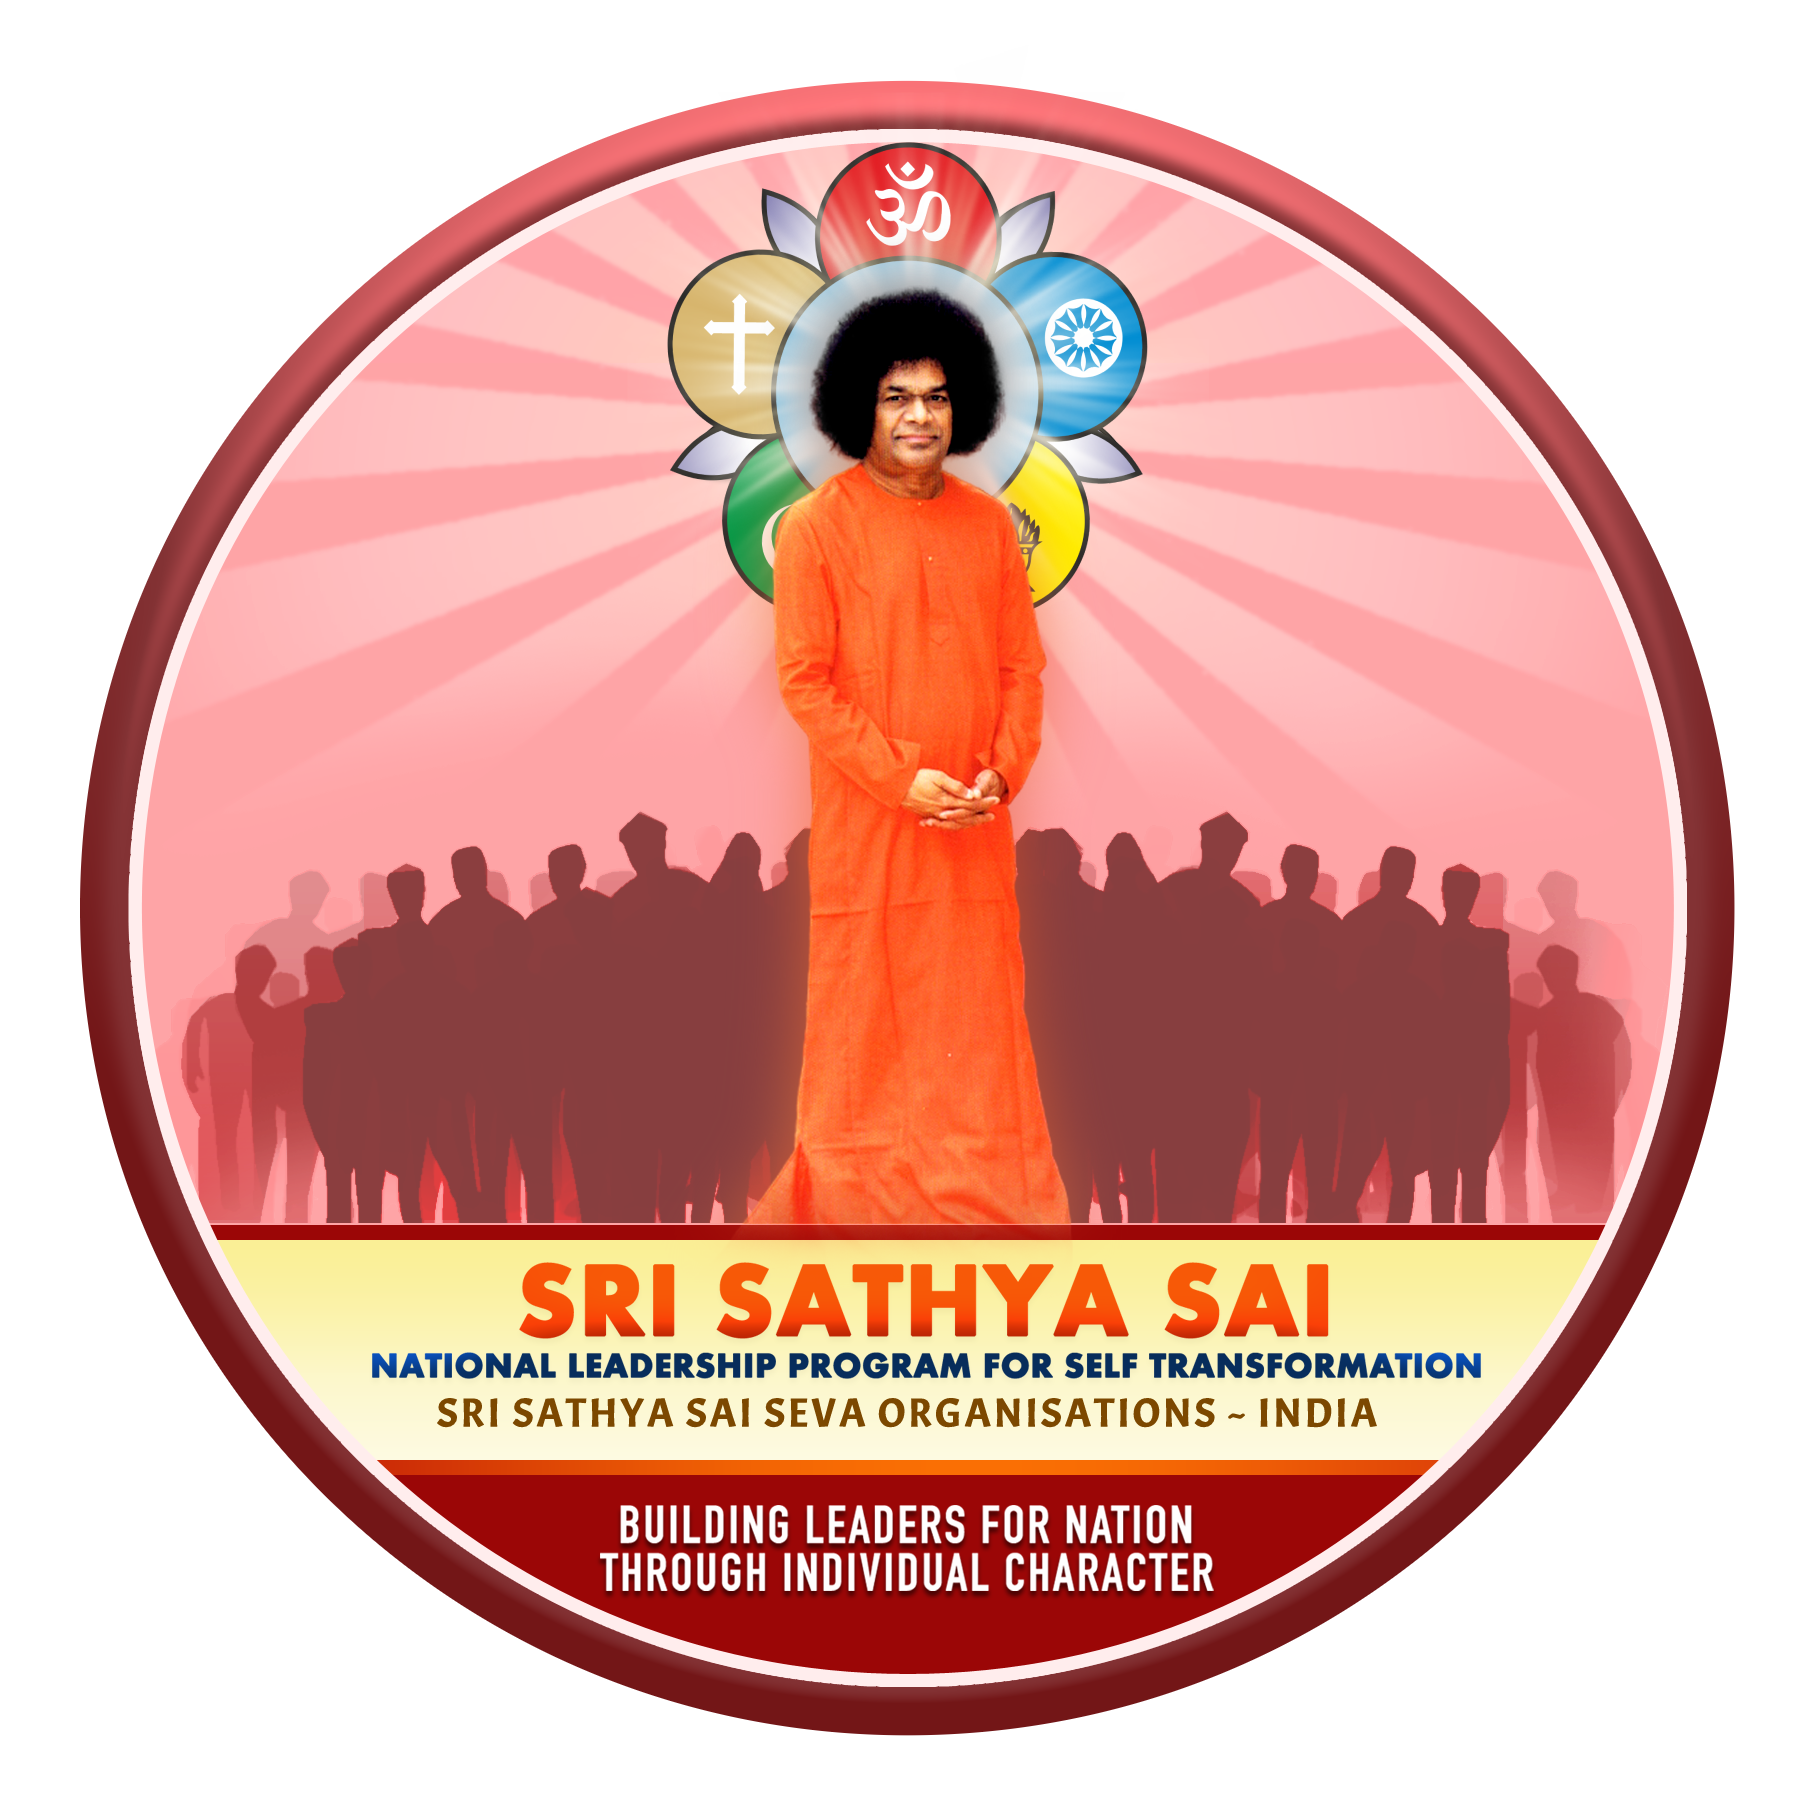 Sri Sathya Sai National Leadership Programme for Self Transformation